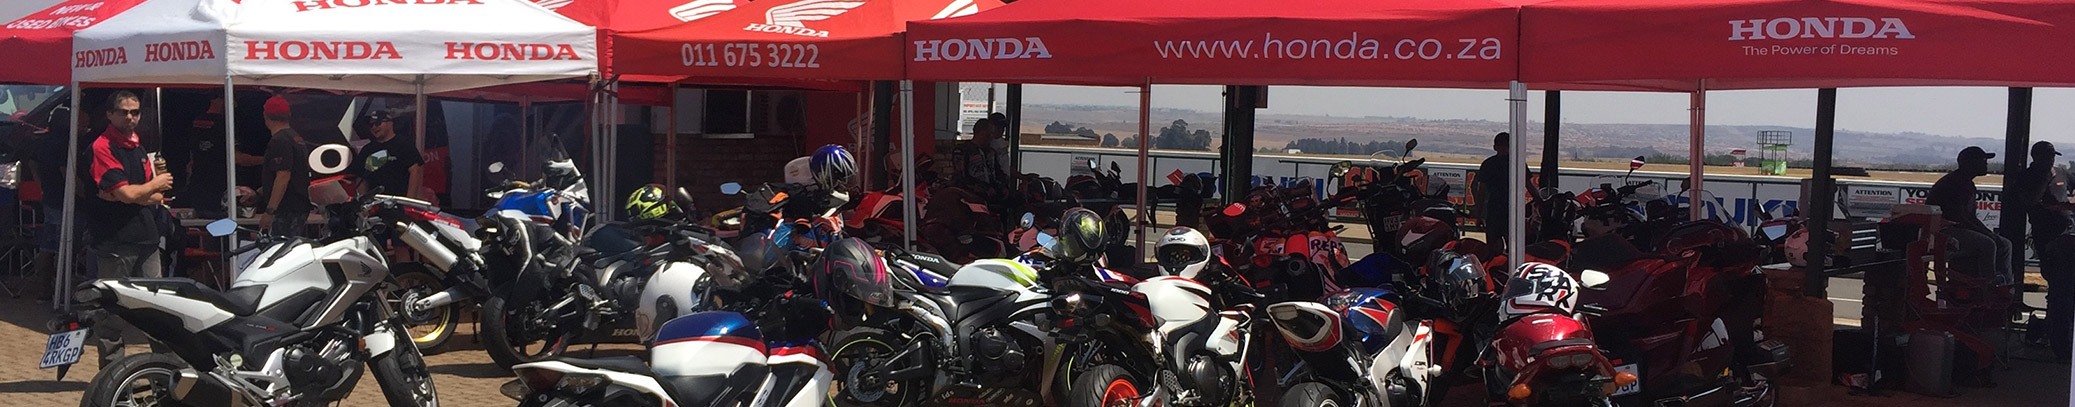 Honda Motorcycles track demo day at Red Star Raceway